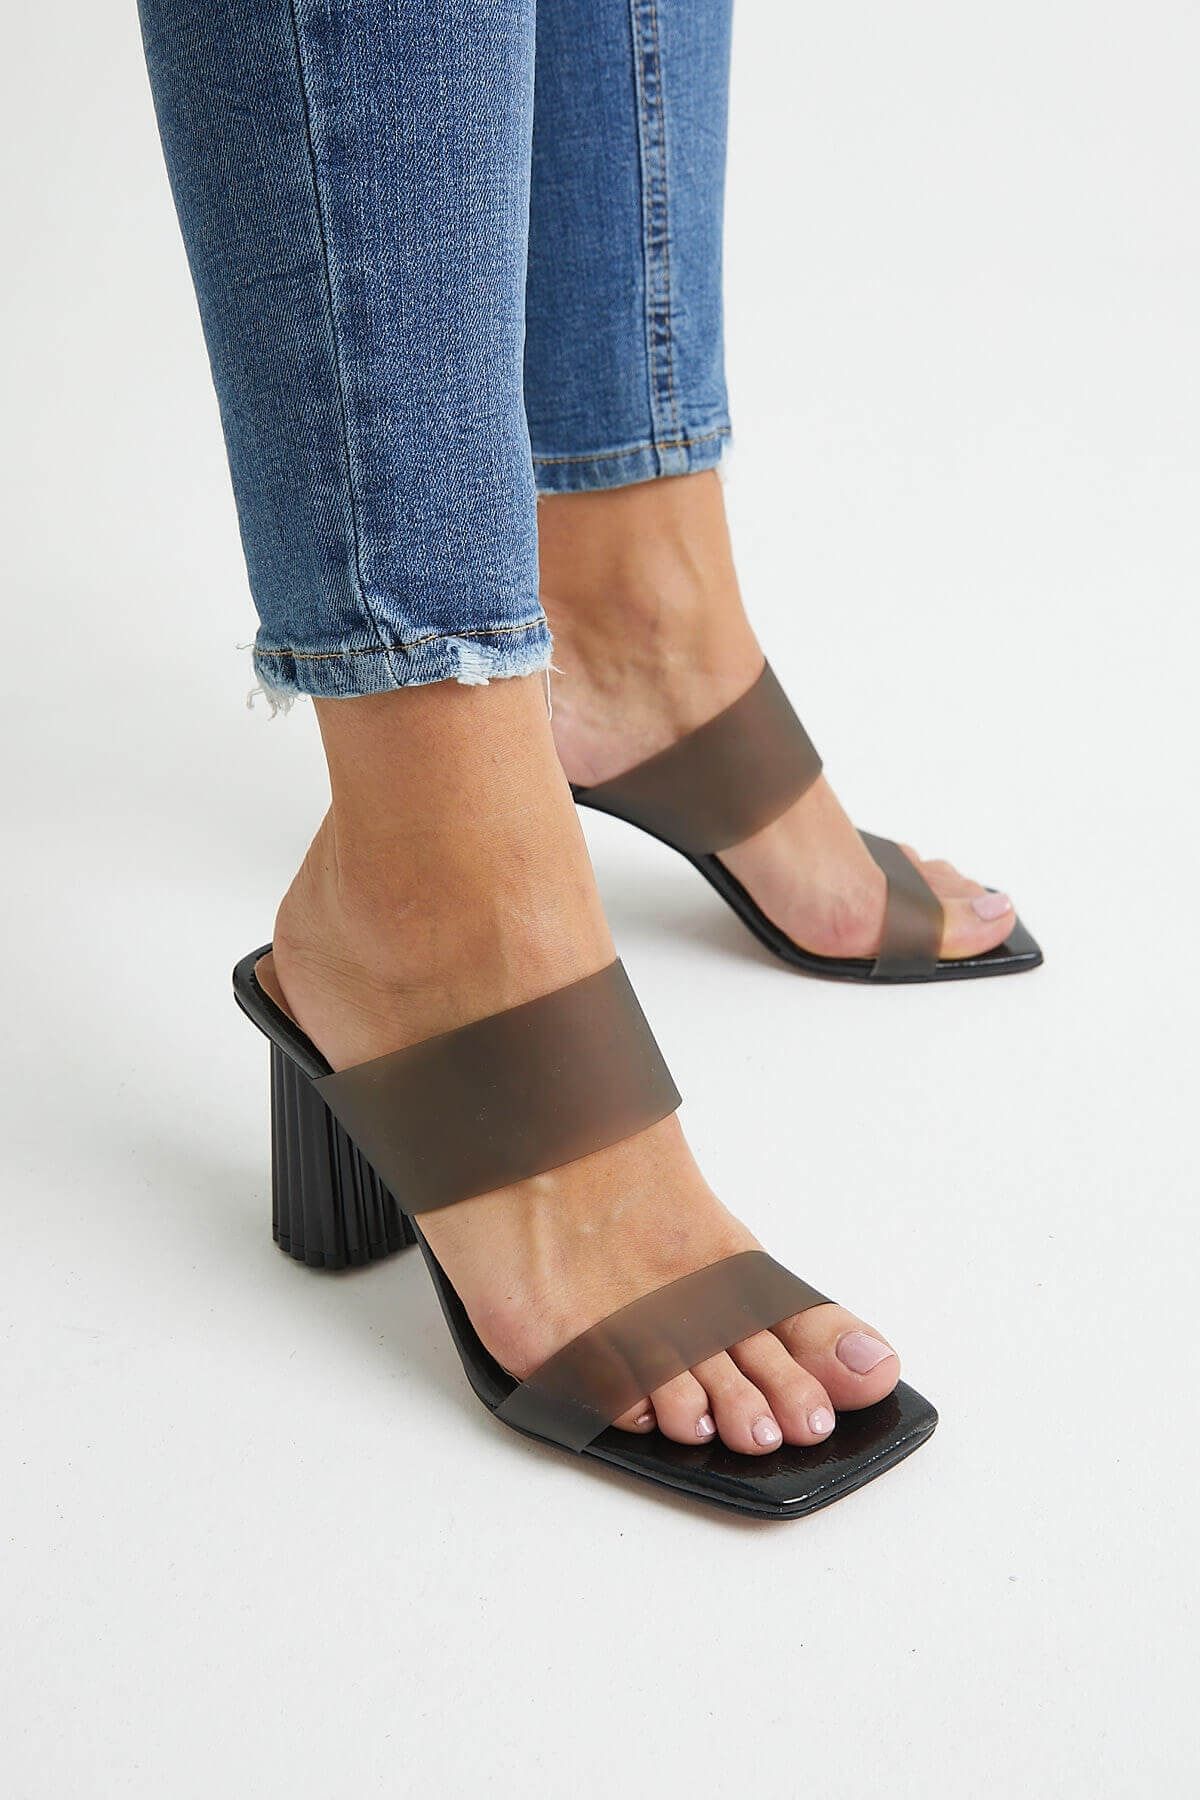 MELSU Logan Kadın Şeffaf Bantlı Topuklu Sandalet Siyah